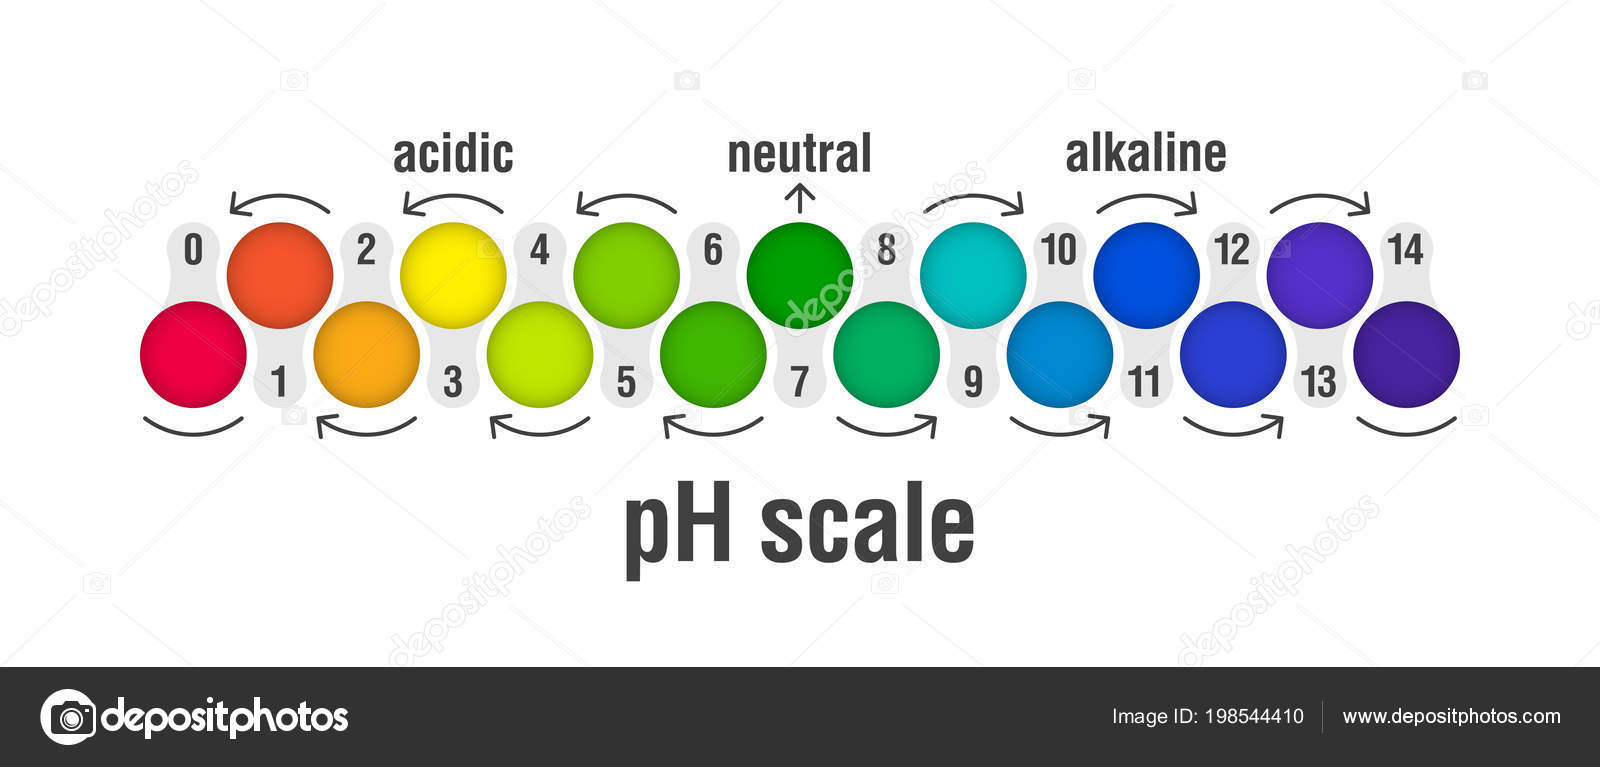 Acid Alkaline Balance Chart